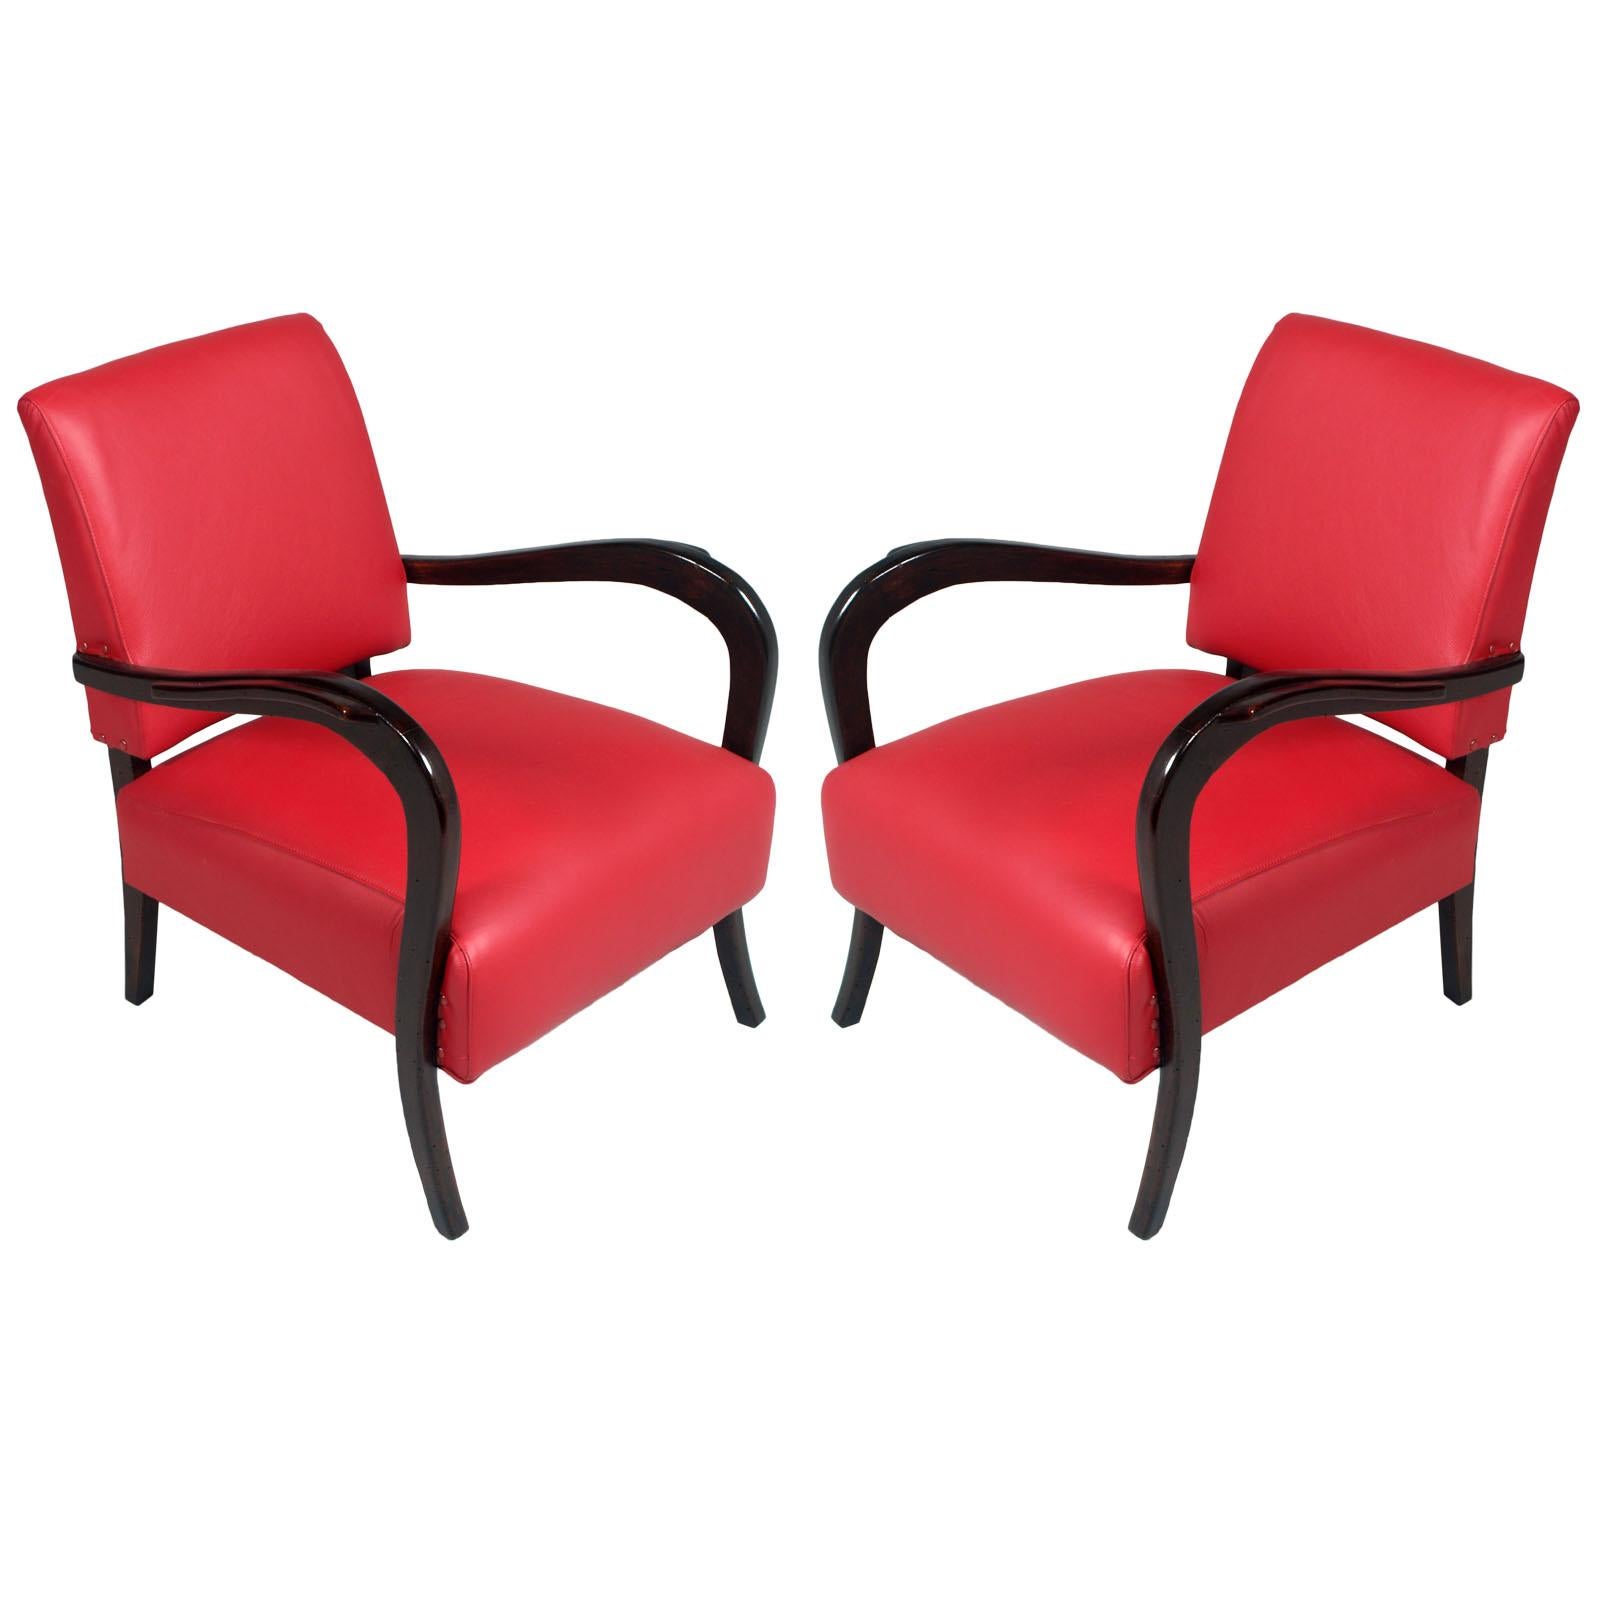 Paolo Buffa Attributed Art Deco Lounge Chairs, Ebonized Walnut Curved Armrests